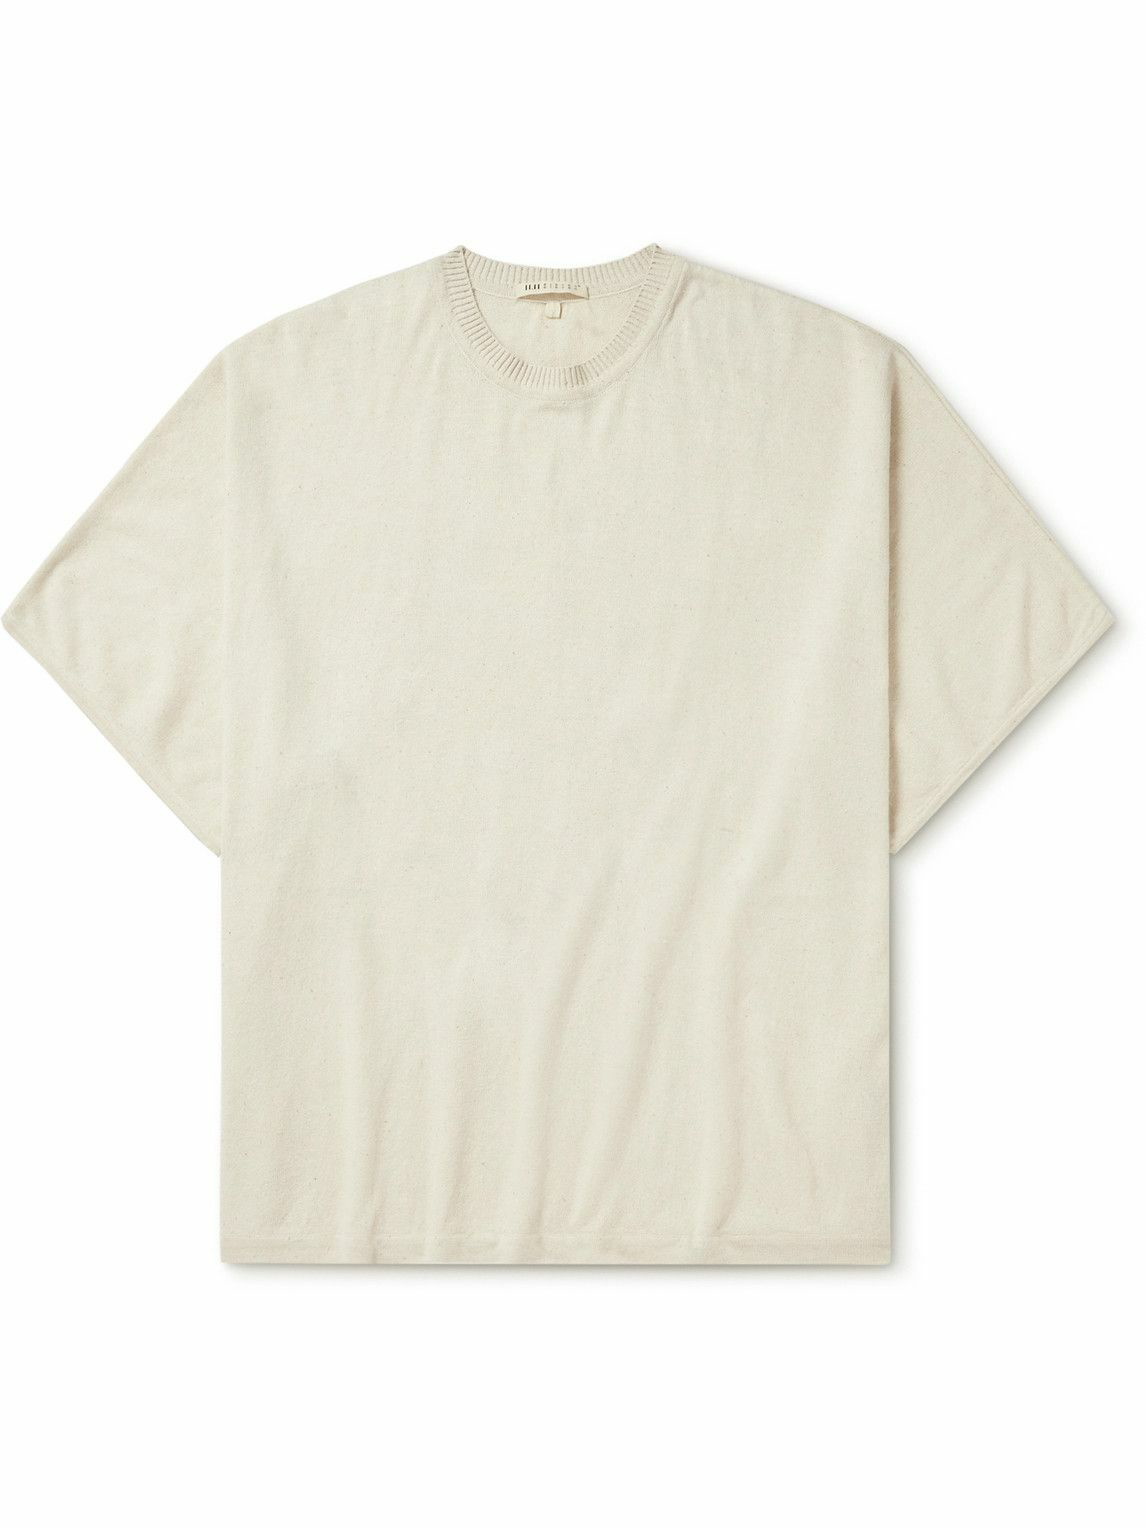 Photo: 11.11/eleven eleven - Cotton T-Shirt - Neutrals